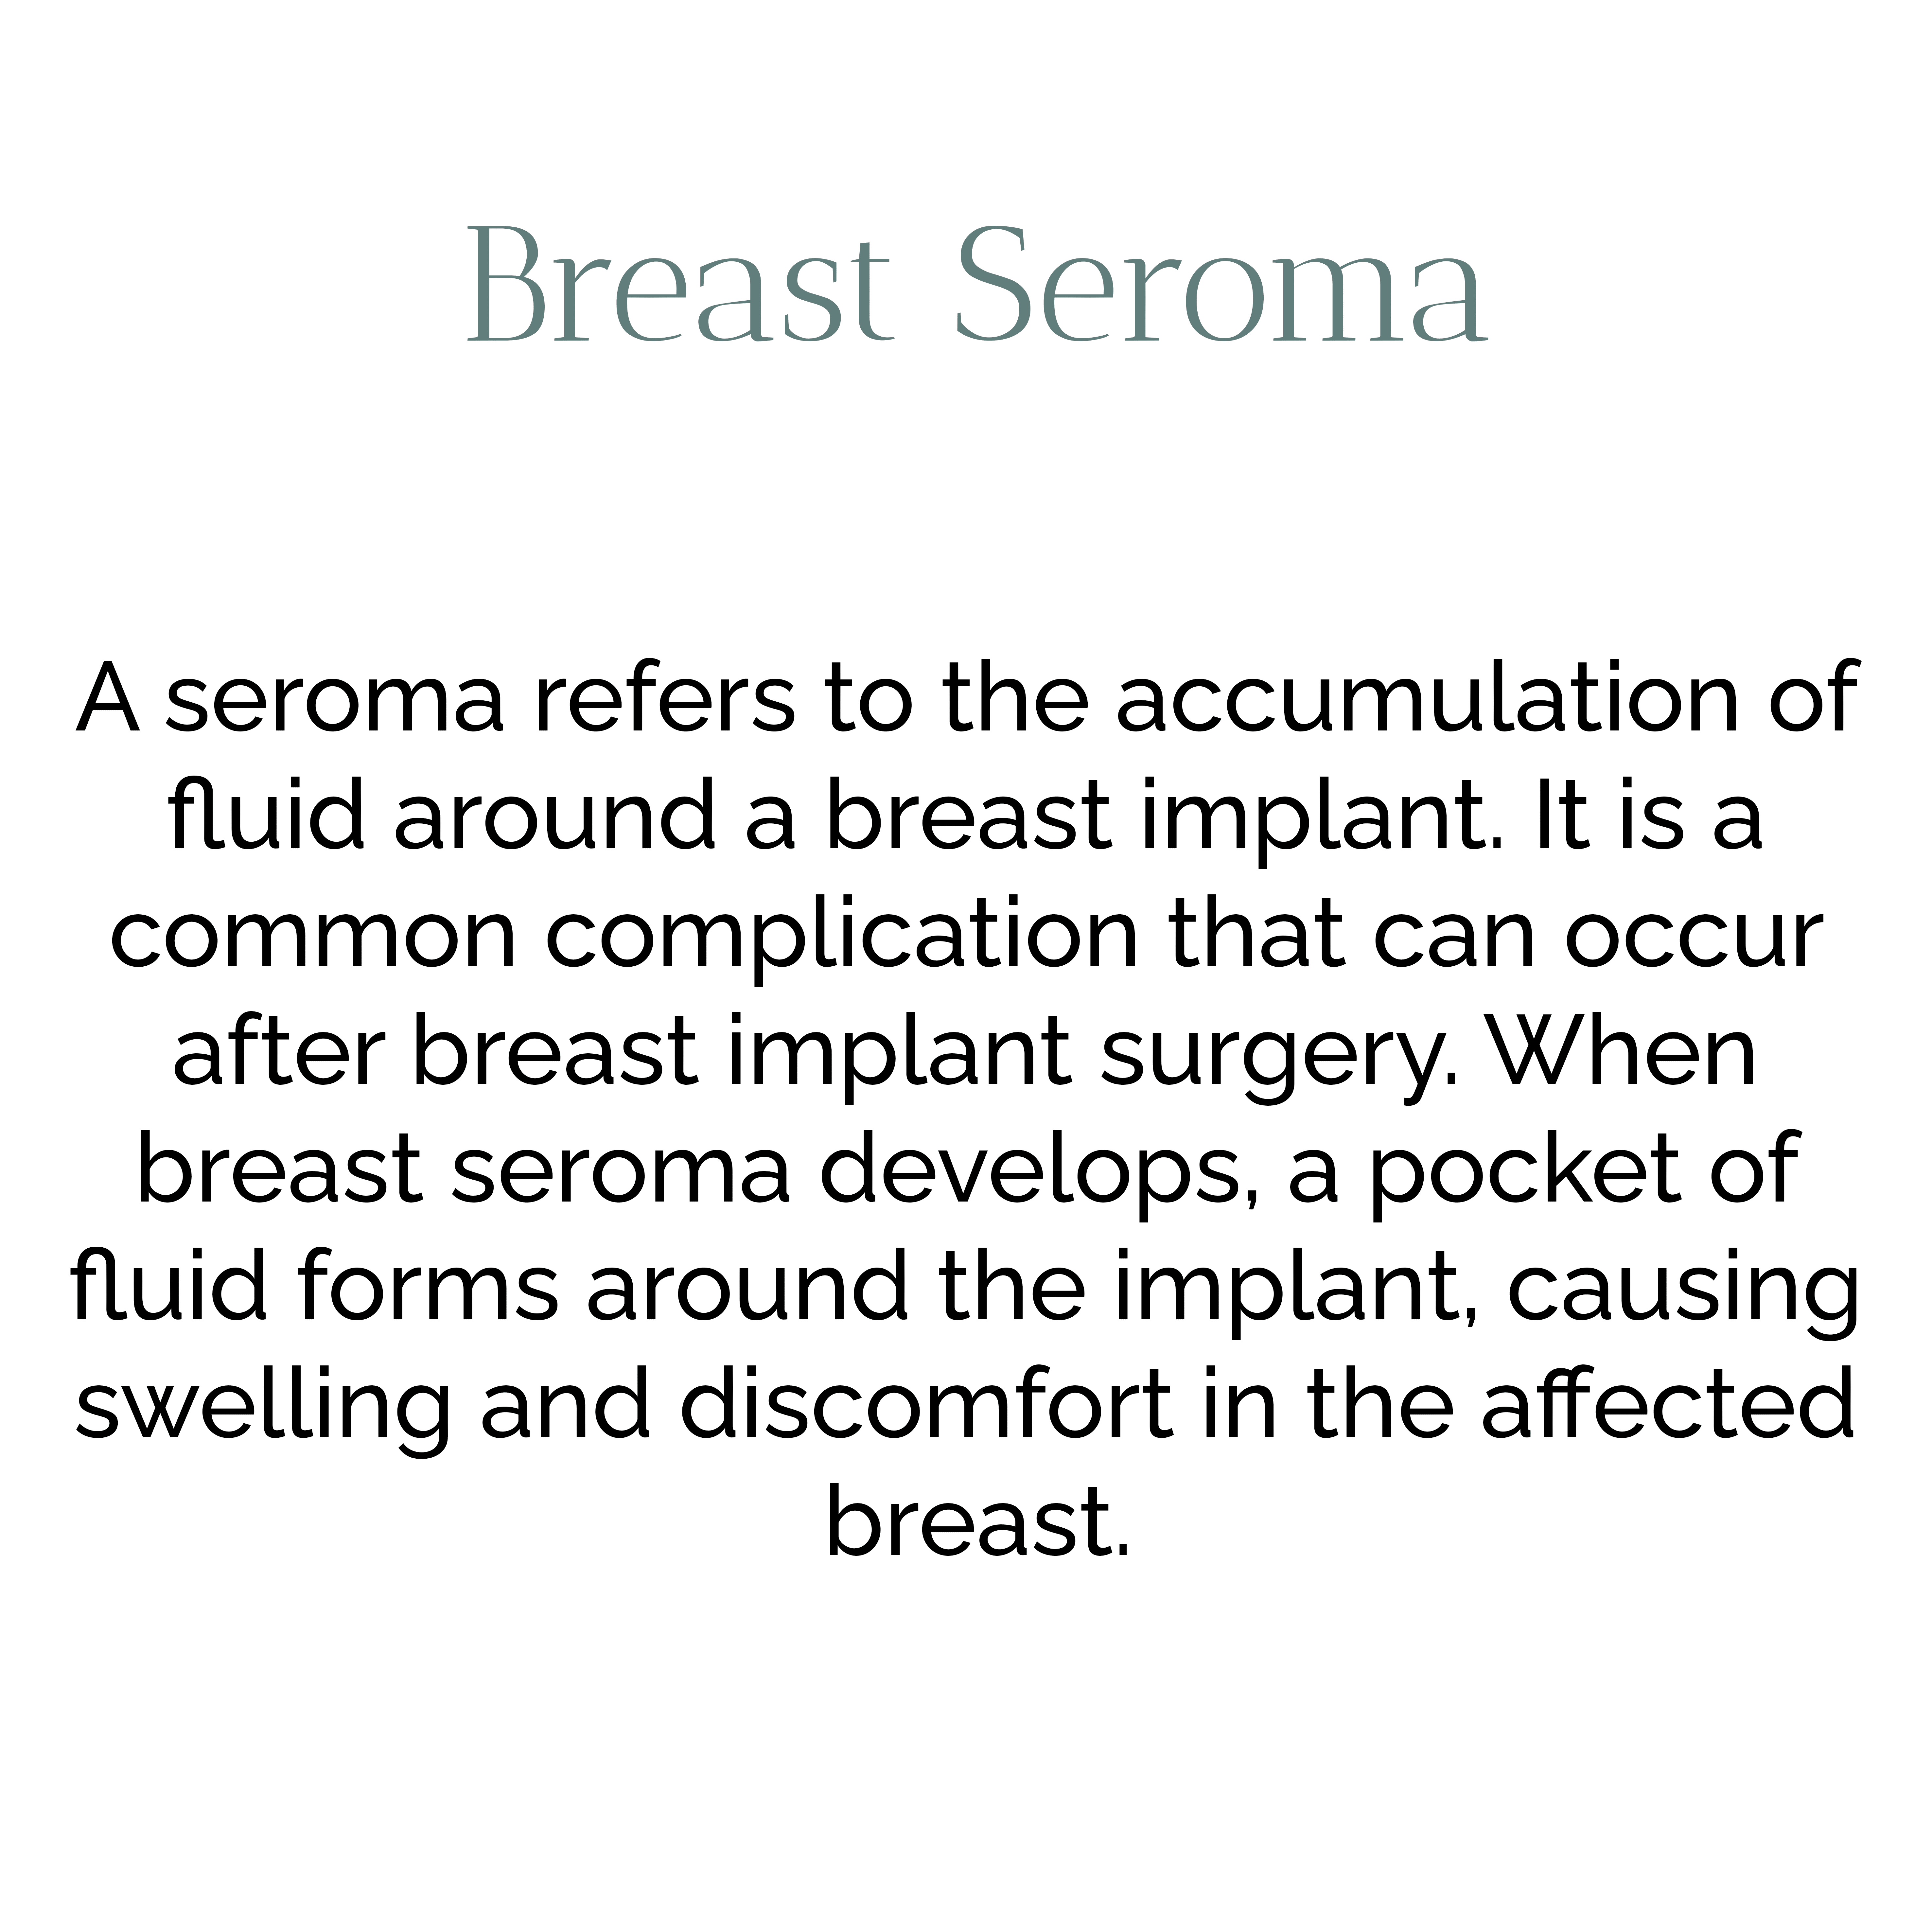 1 breast seroma